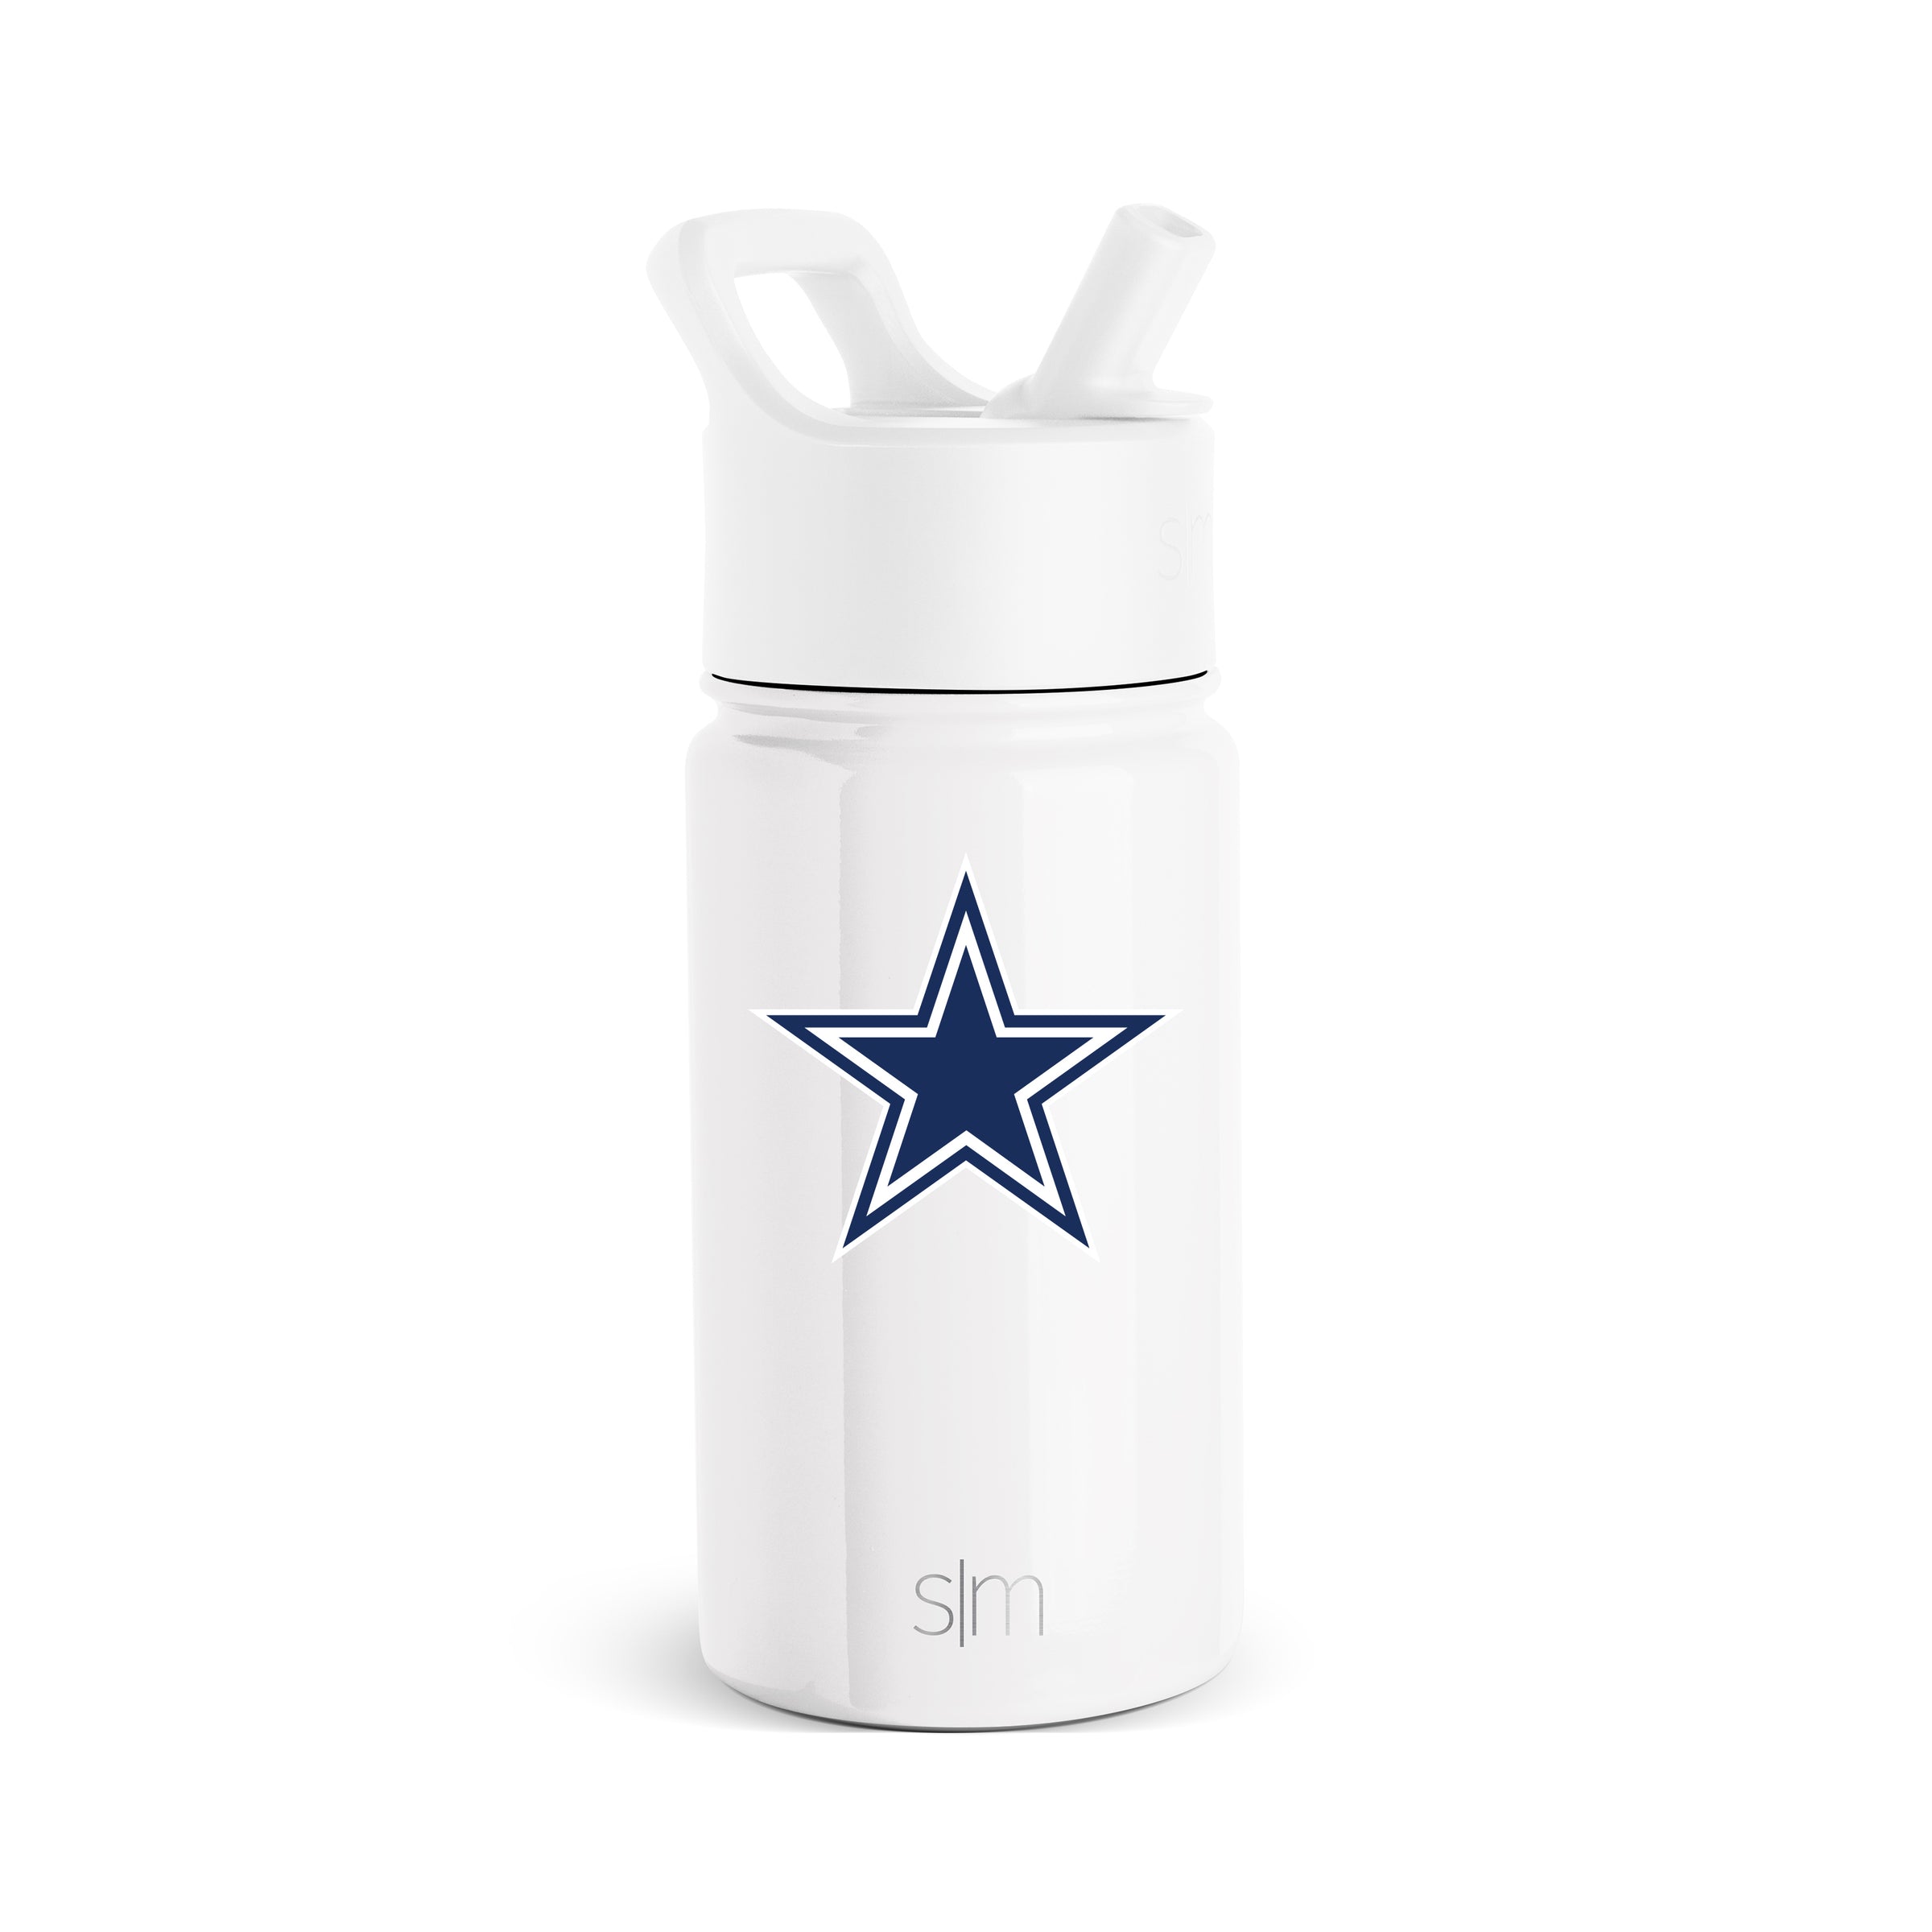 Dallas Cowboys Squeezy Water Bottle